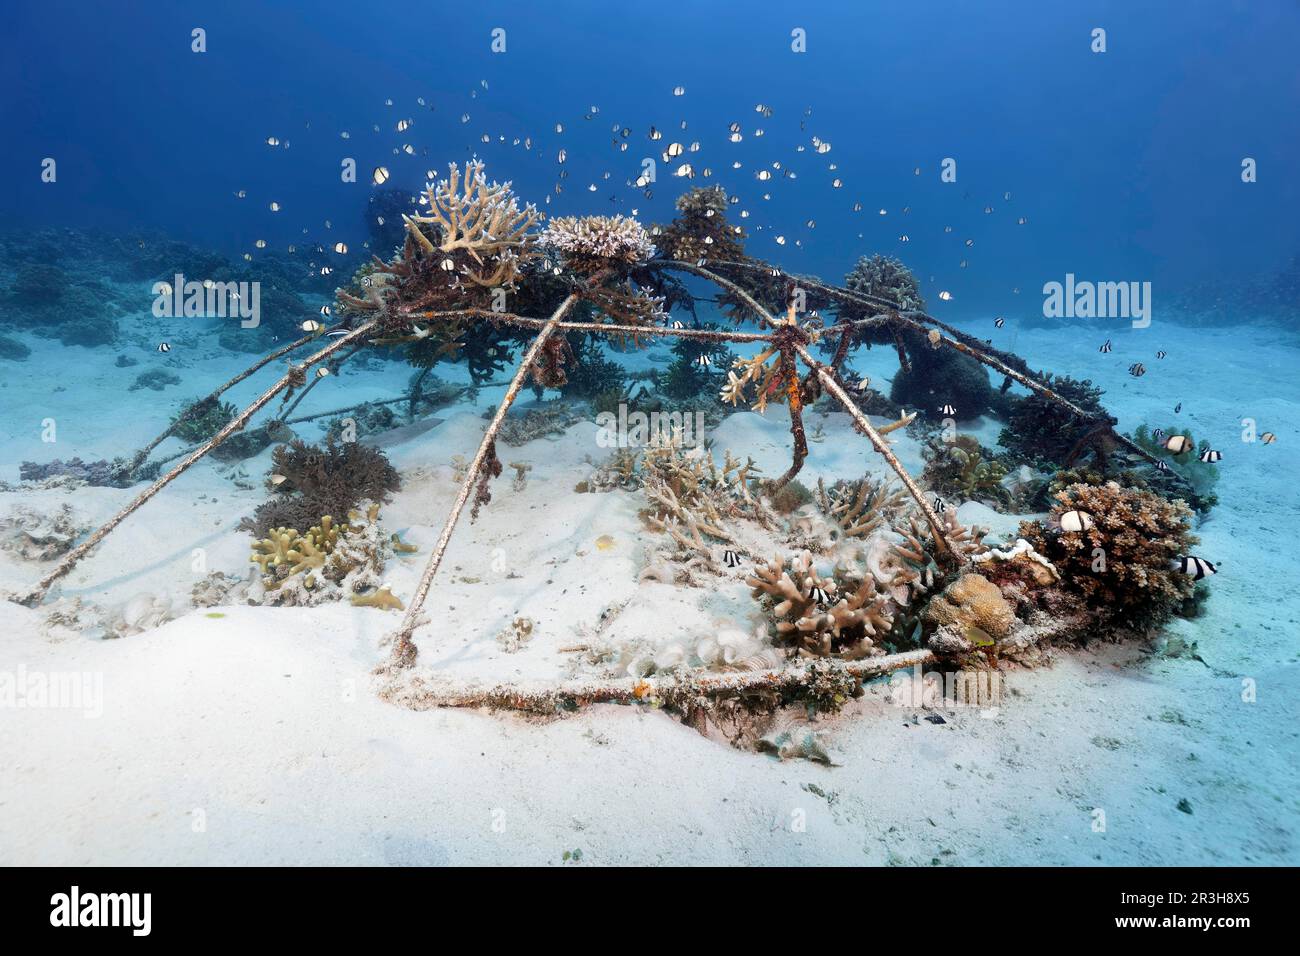 Metal construction for breeding, raising, breeding, propagation, multiplying stony corals (Scleractinia), damselfish (Dascyllus aruanus), netted Stock Photo